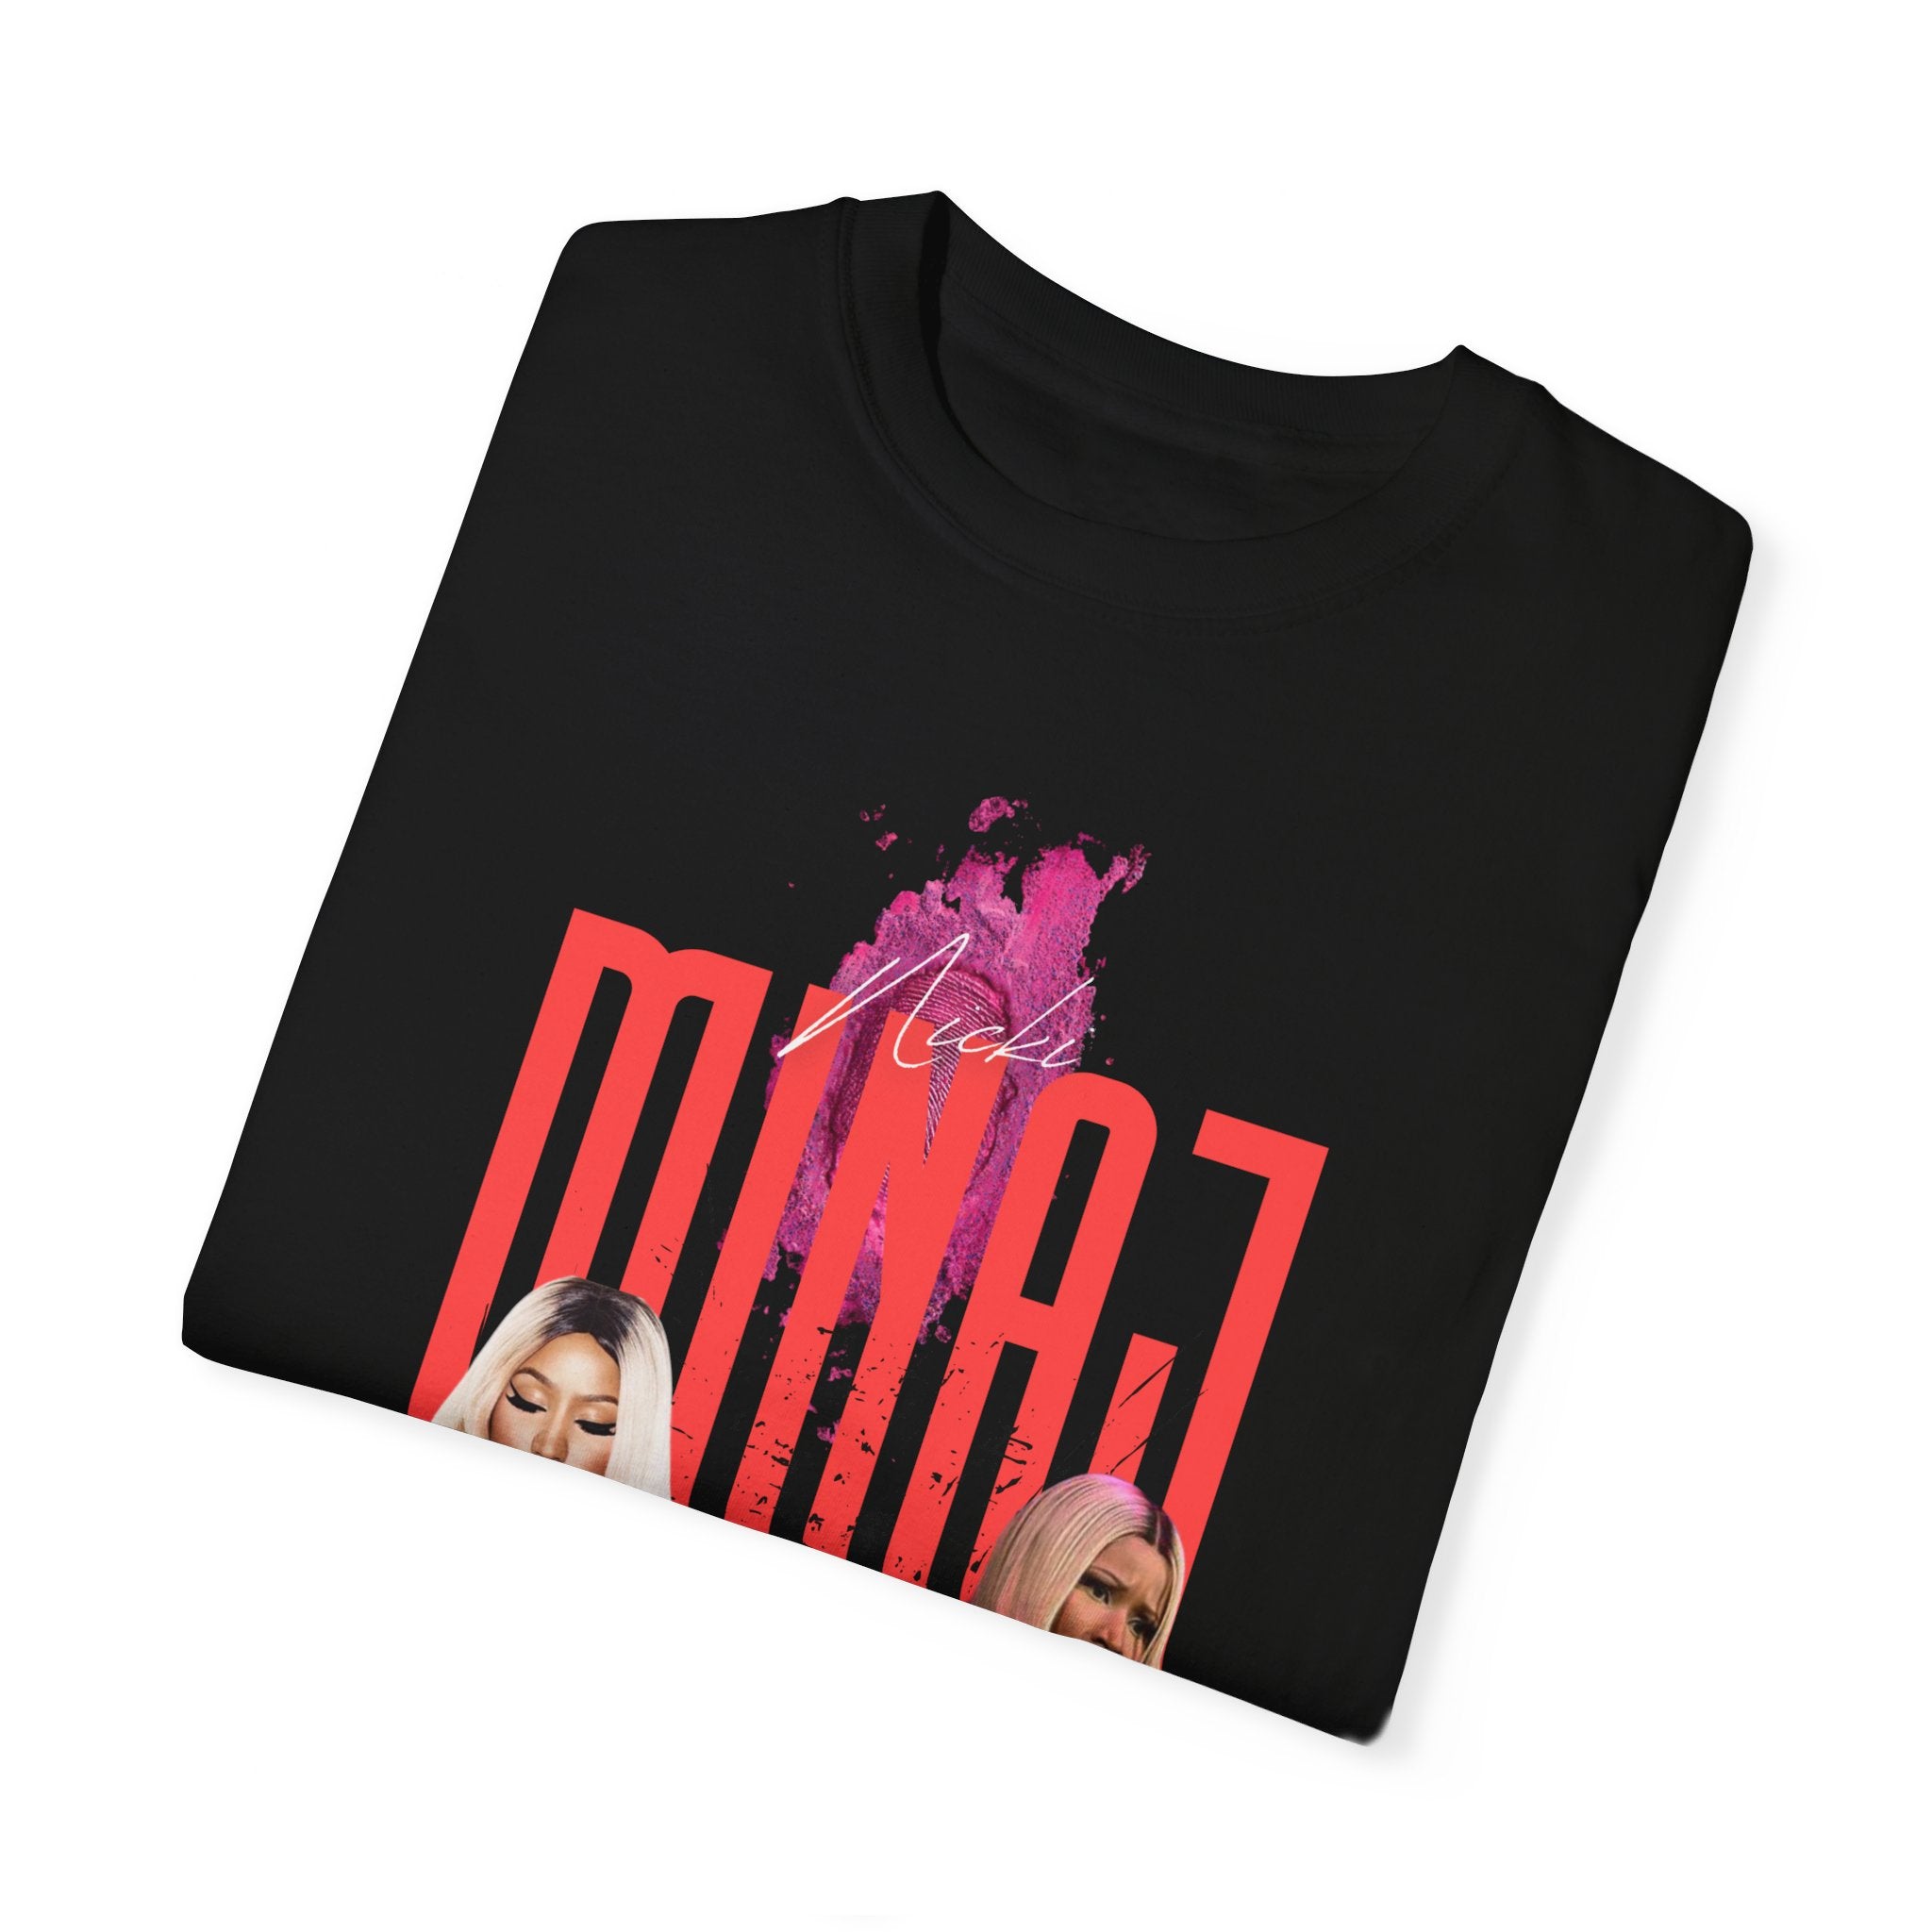 Nicki Minaj Tshirt with Tour Dates Premium Print Surface Cotton Streetwear